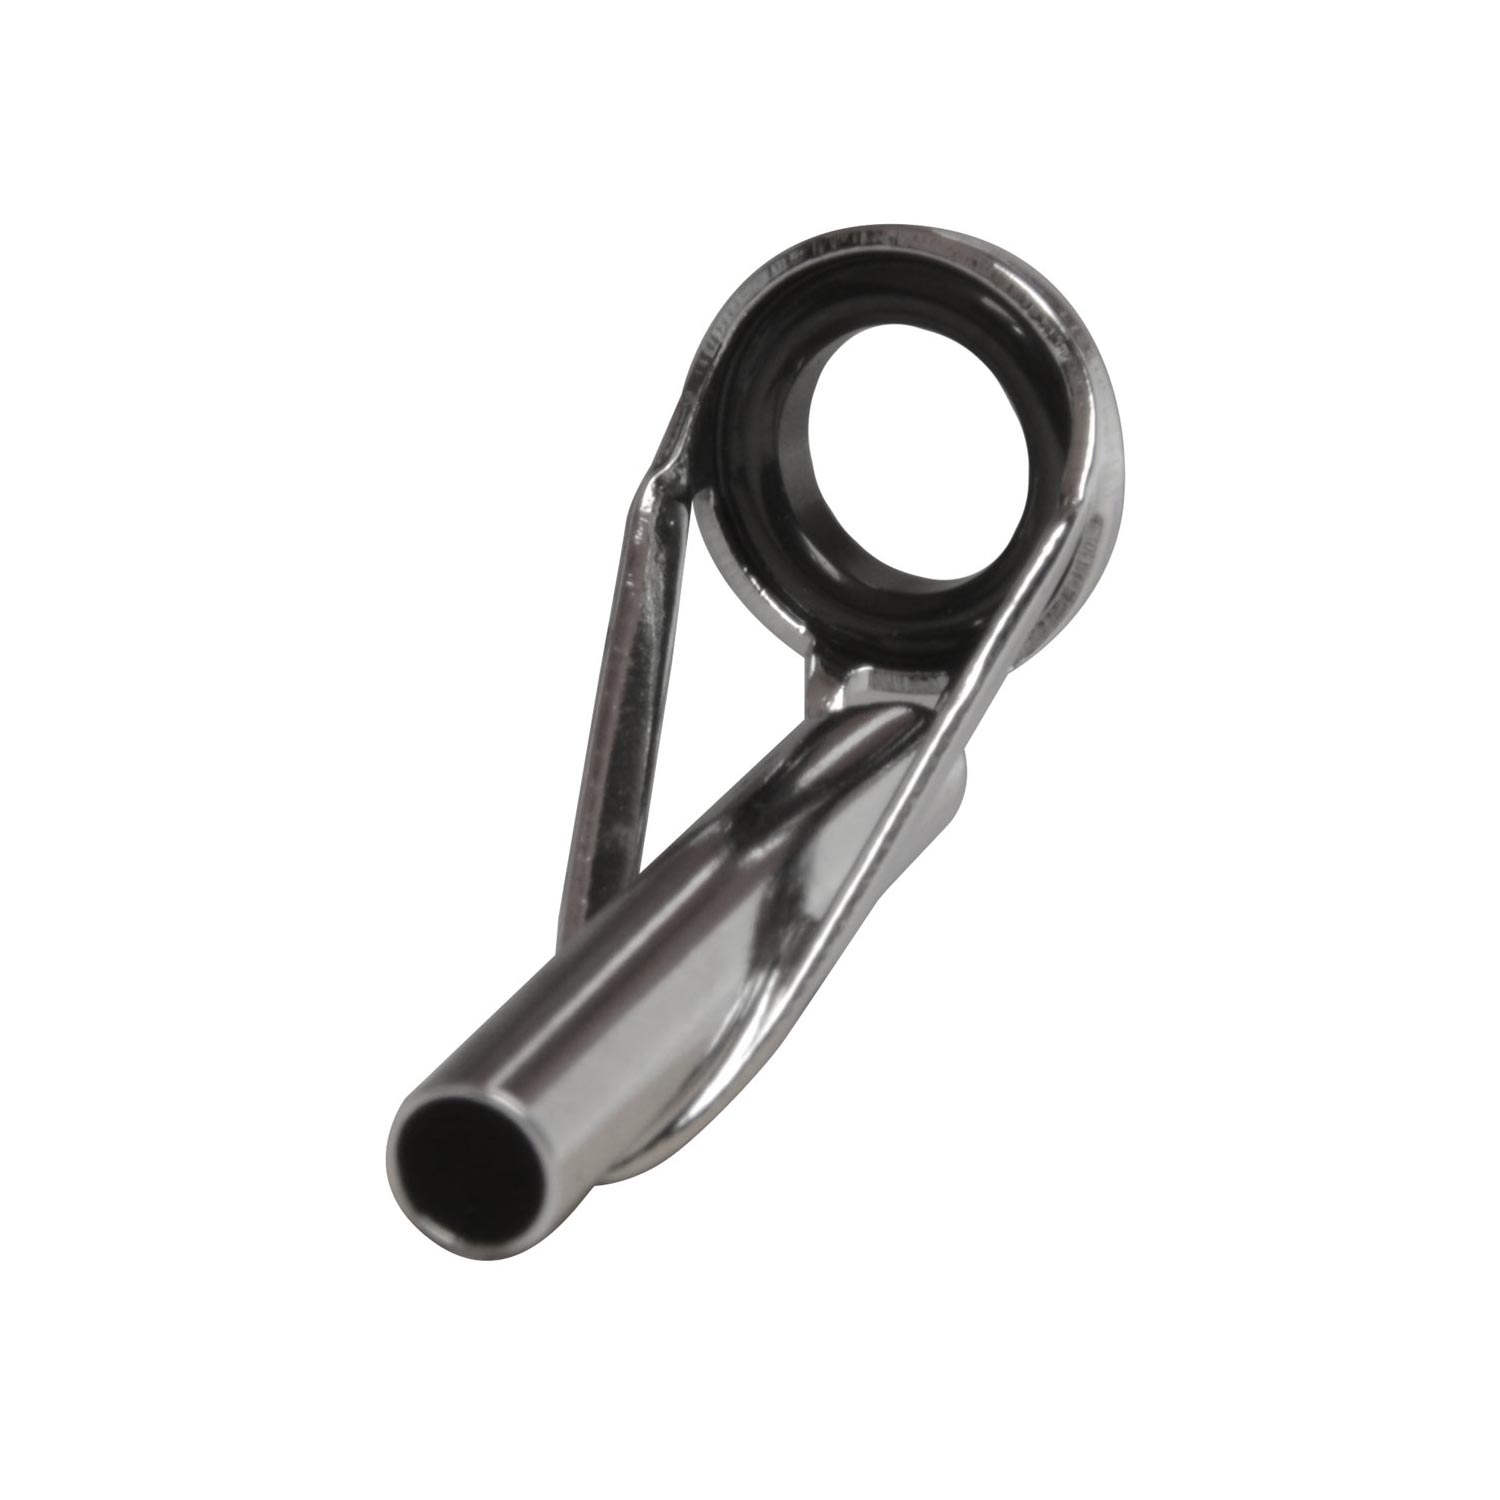 4.8mm Tube Dia Stainless Steel Fishing Rod Tips Repair Kit Ring